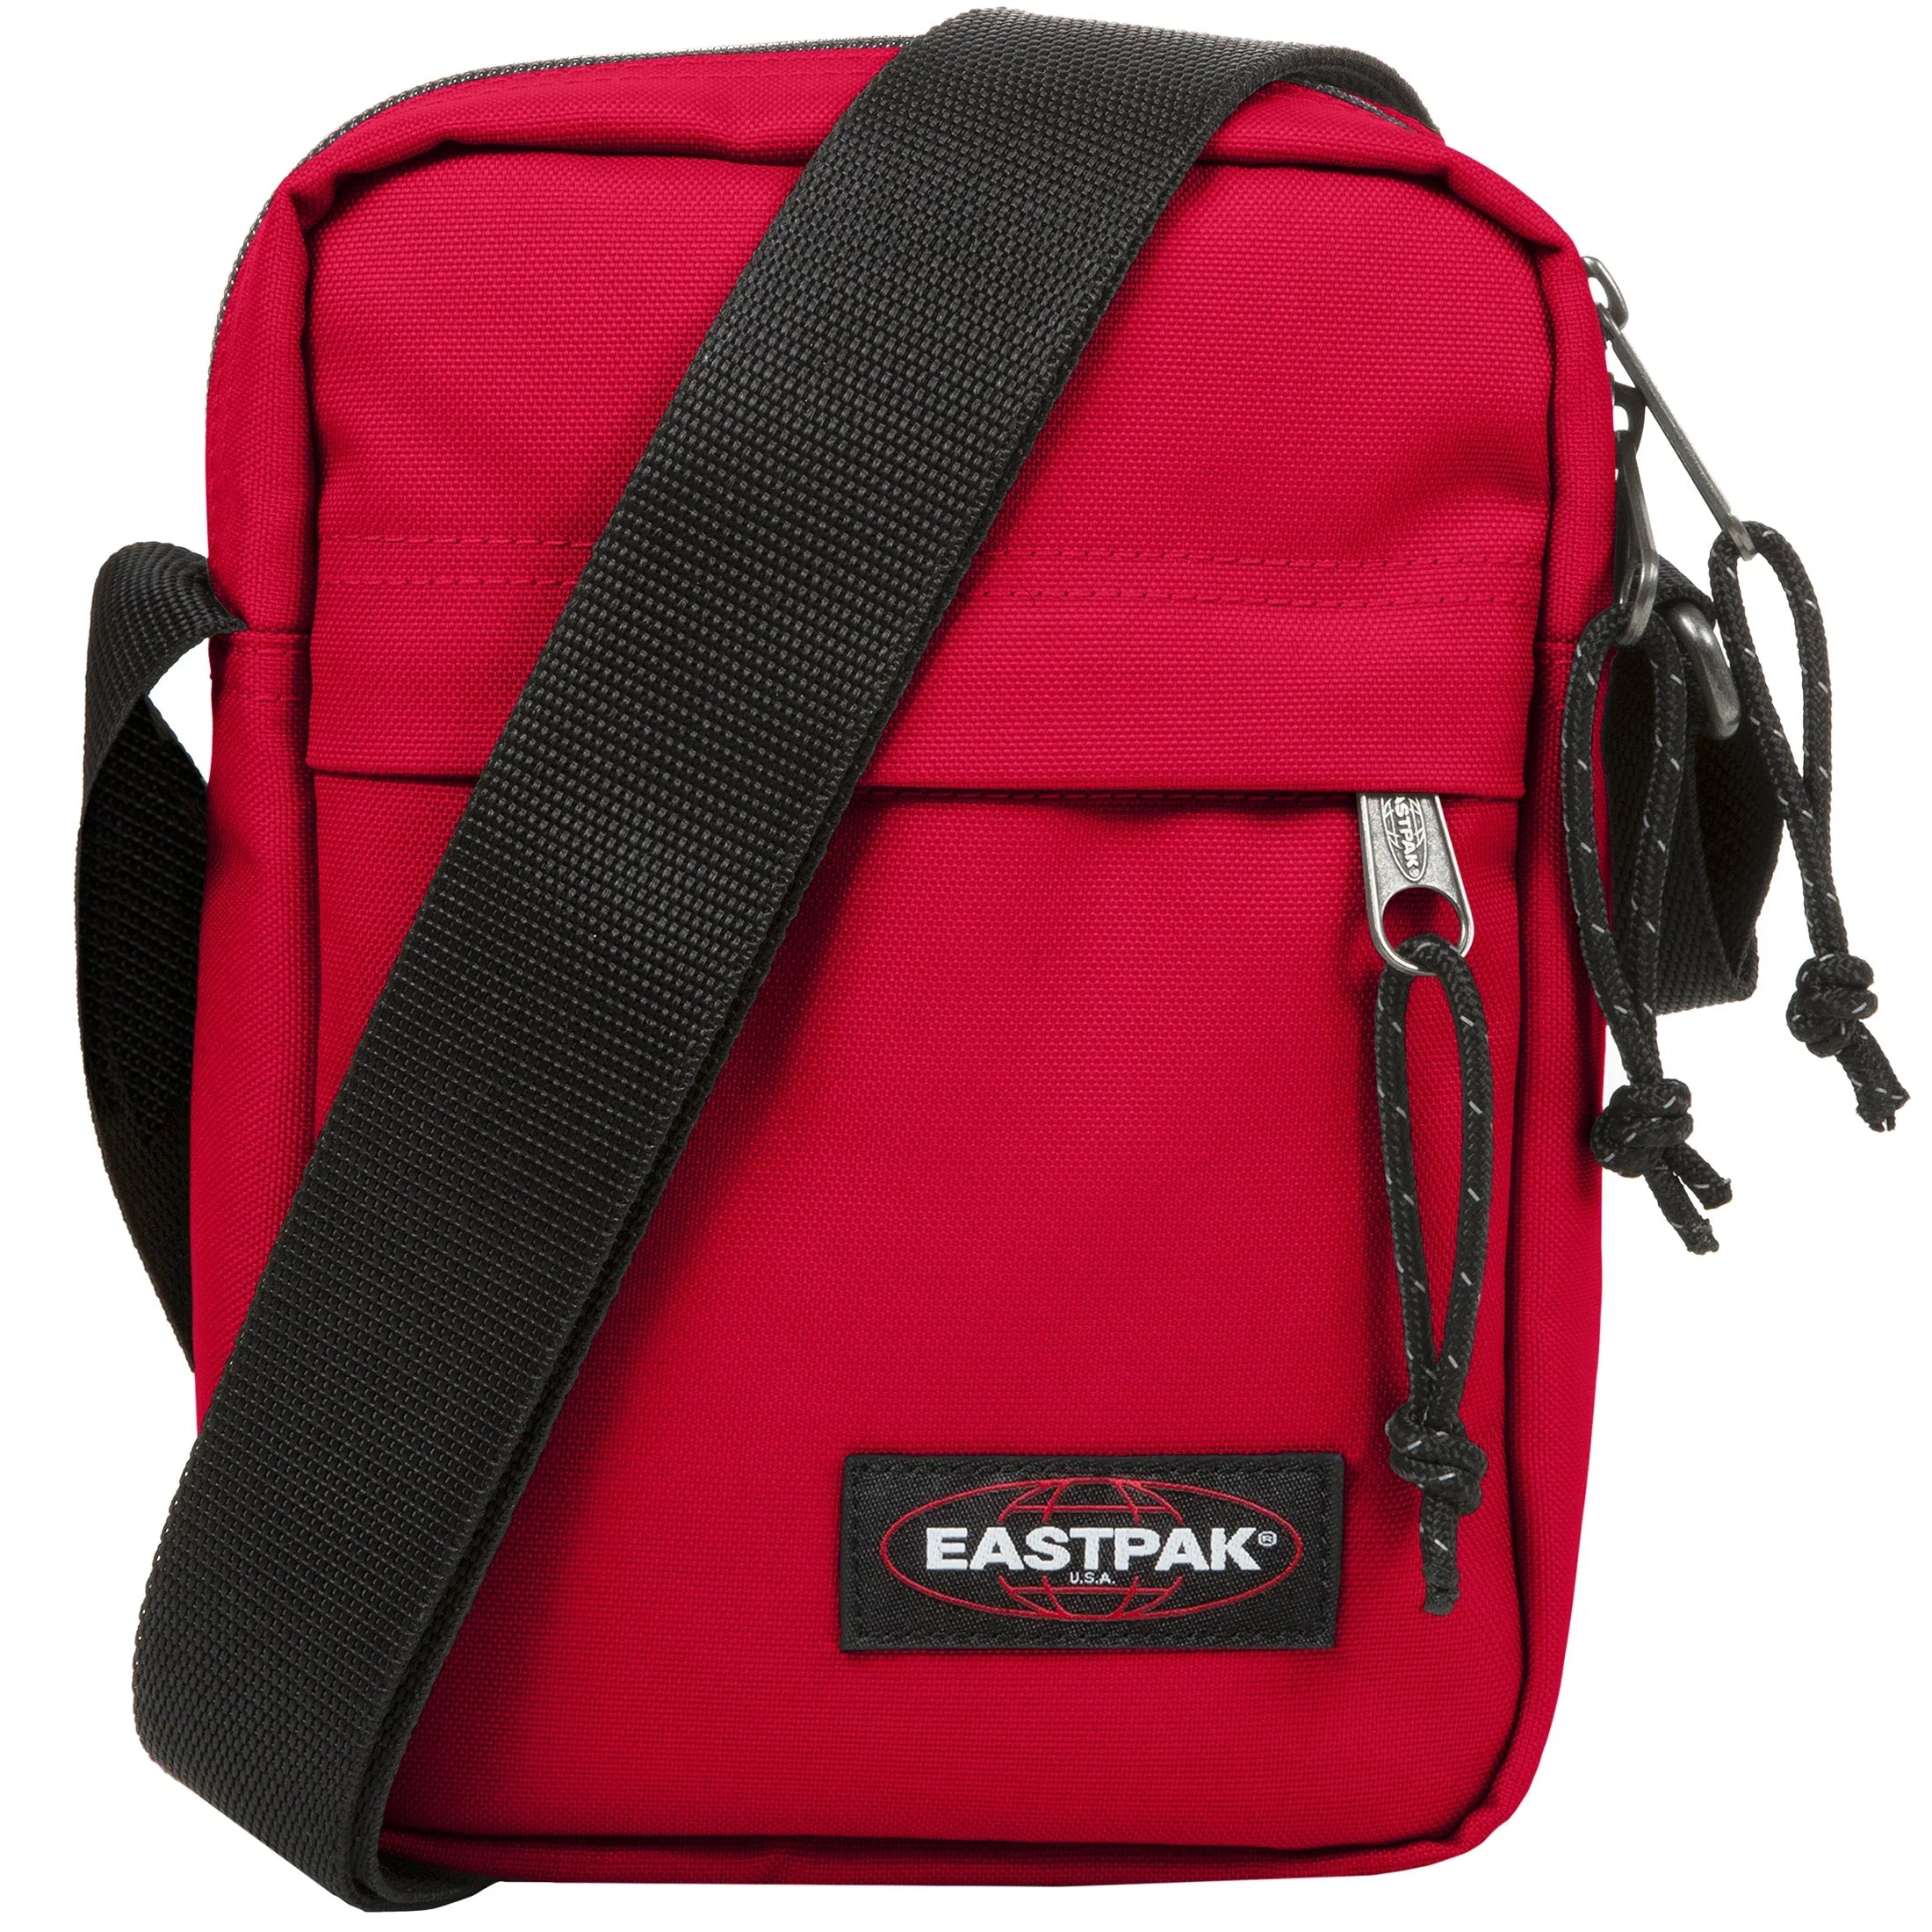 Eastpak Authentic The One Jugendtasche 21 cm - Sailor Red